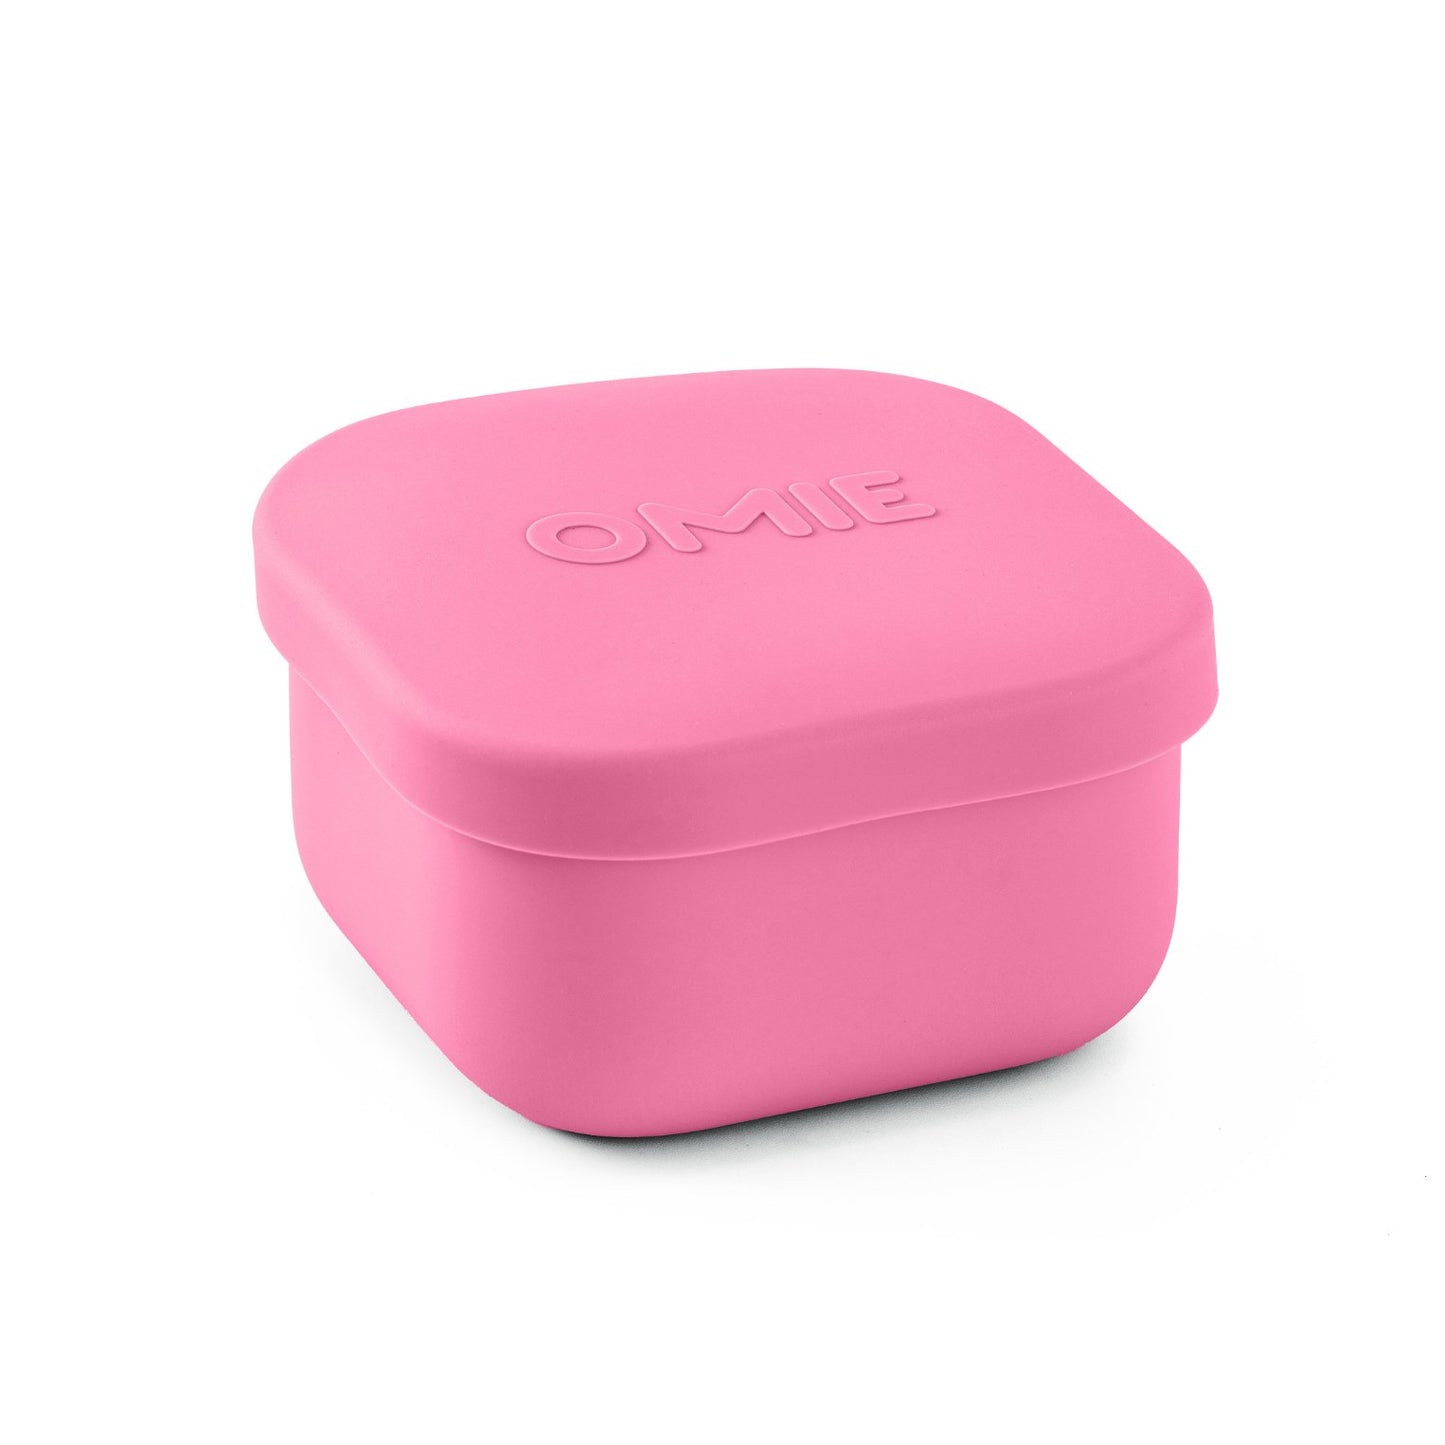 omiesnack_omiebox_pink